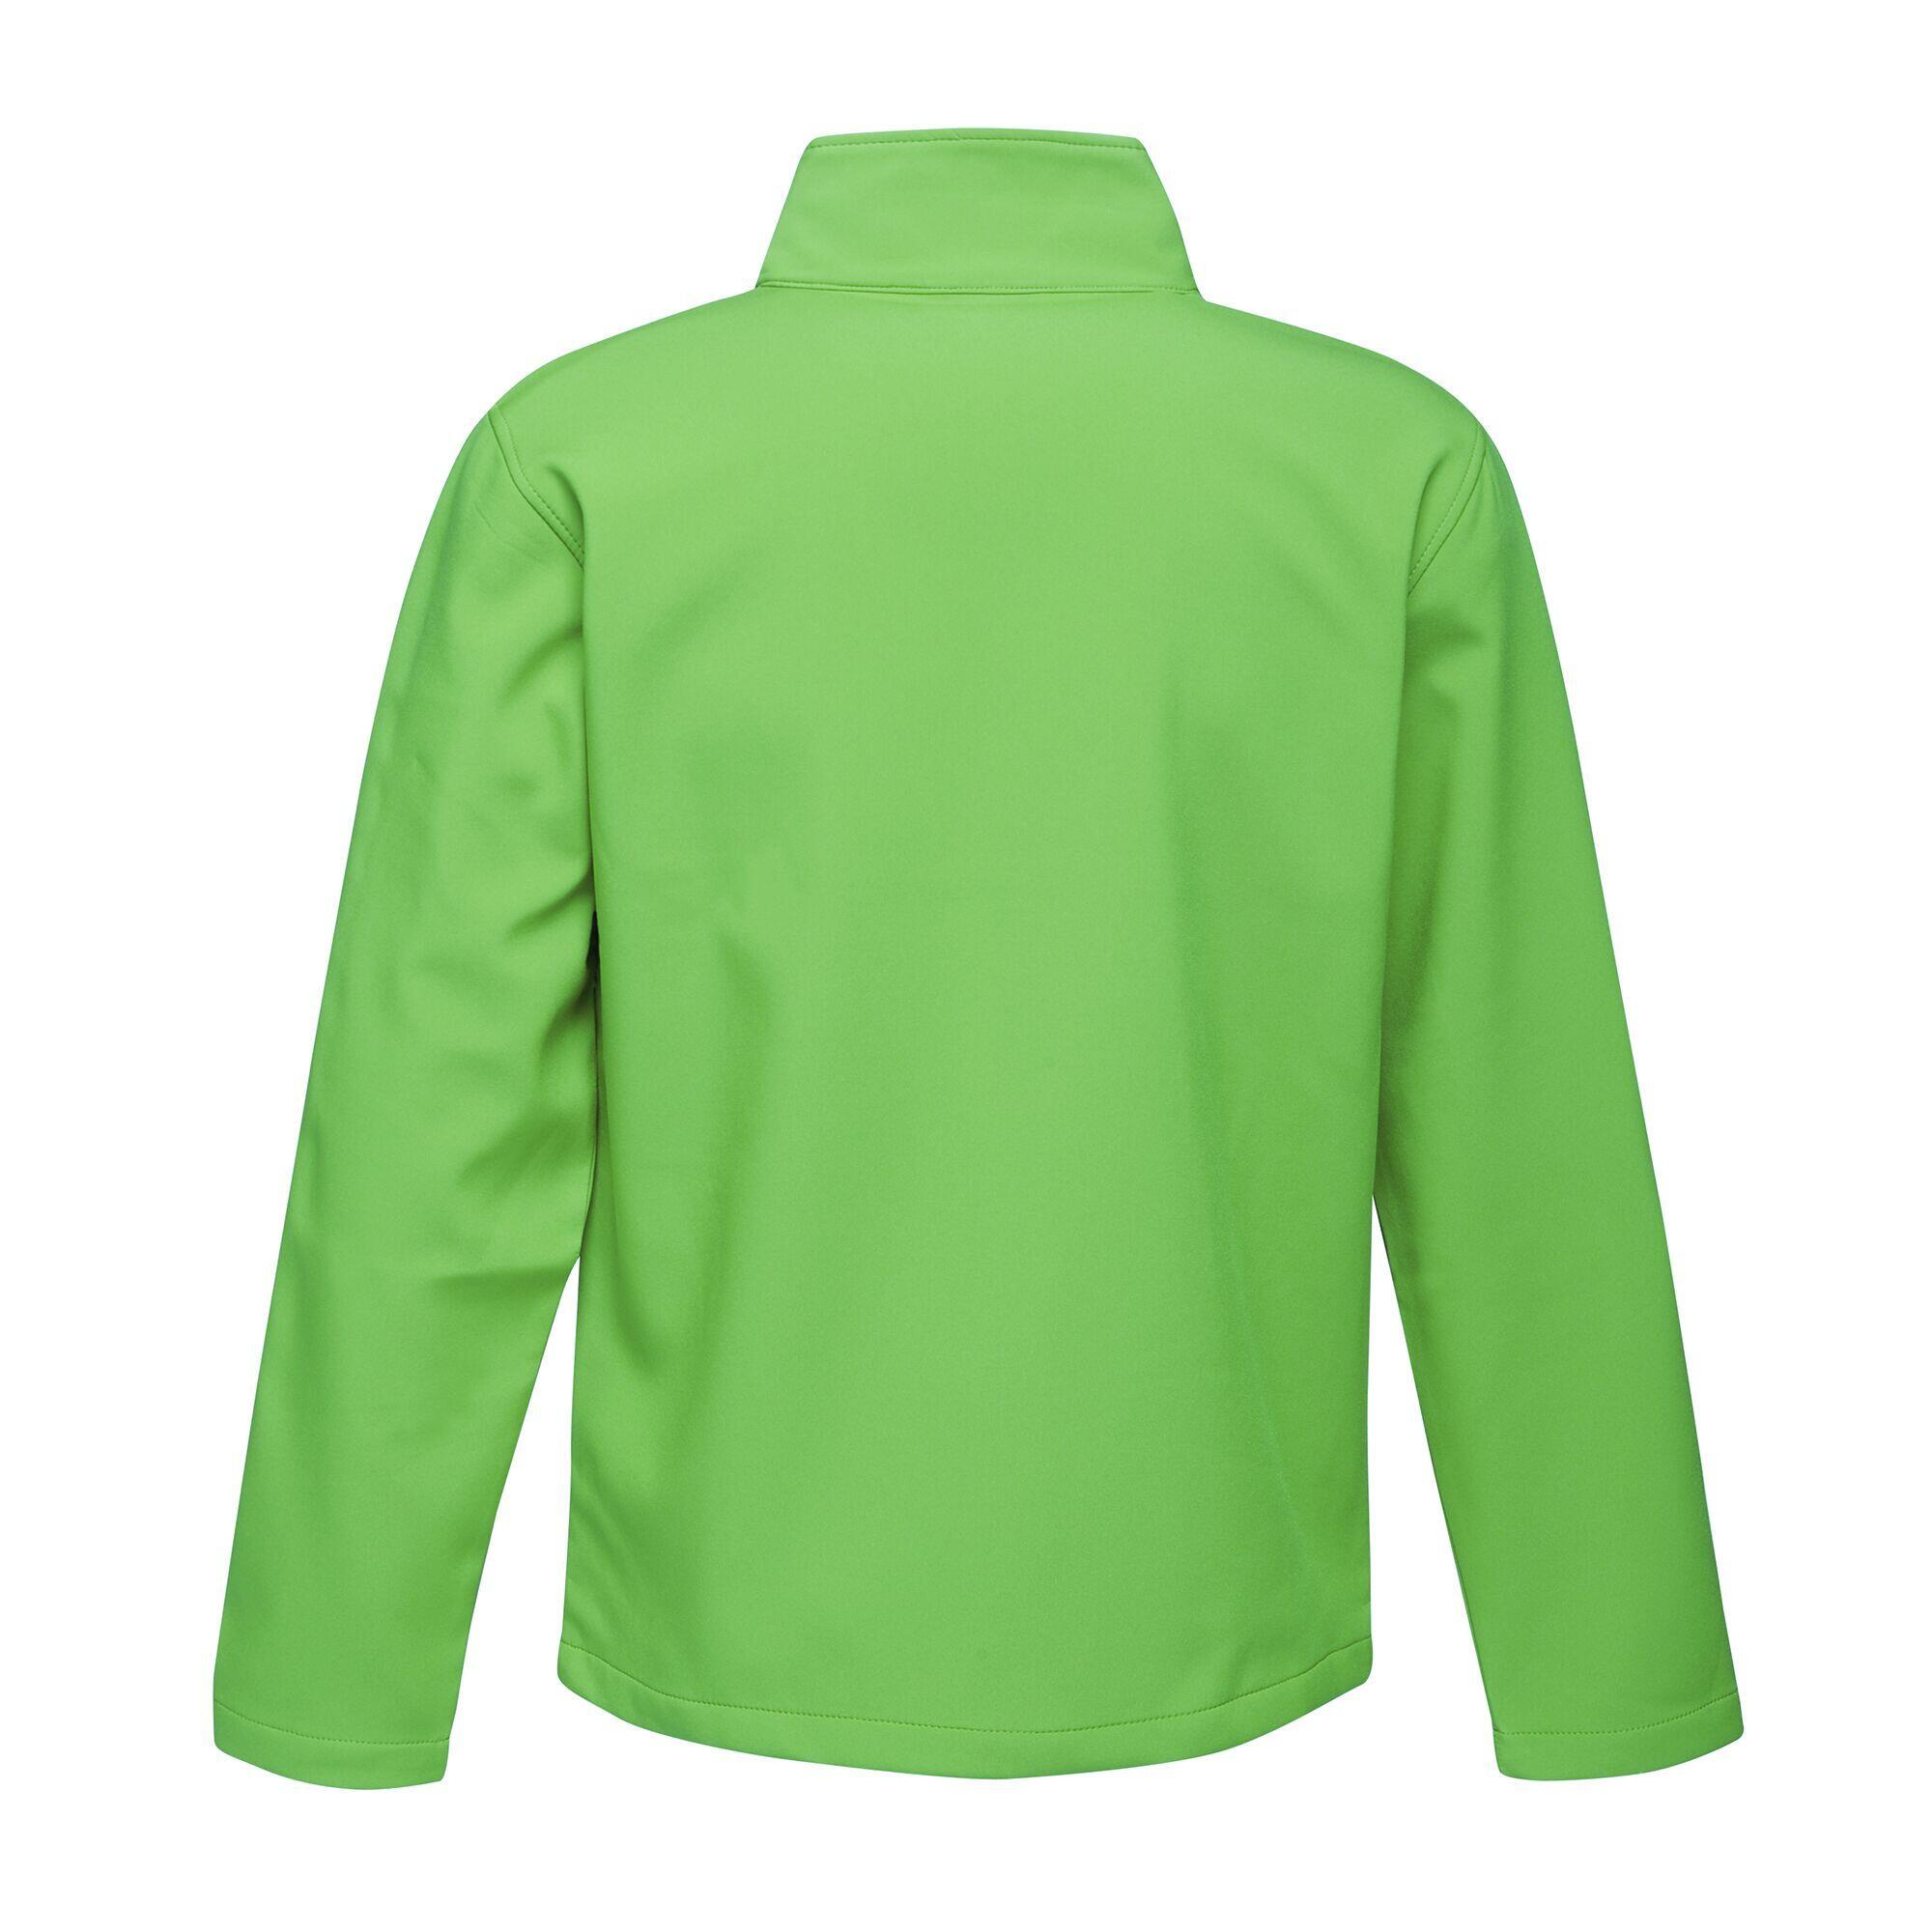 Standout Mens Ablaze Printable Soft Shell Jacket (Extreme Green/Black) 2/5